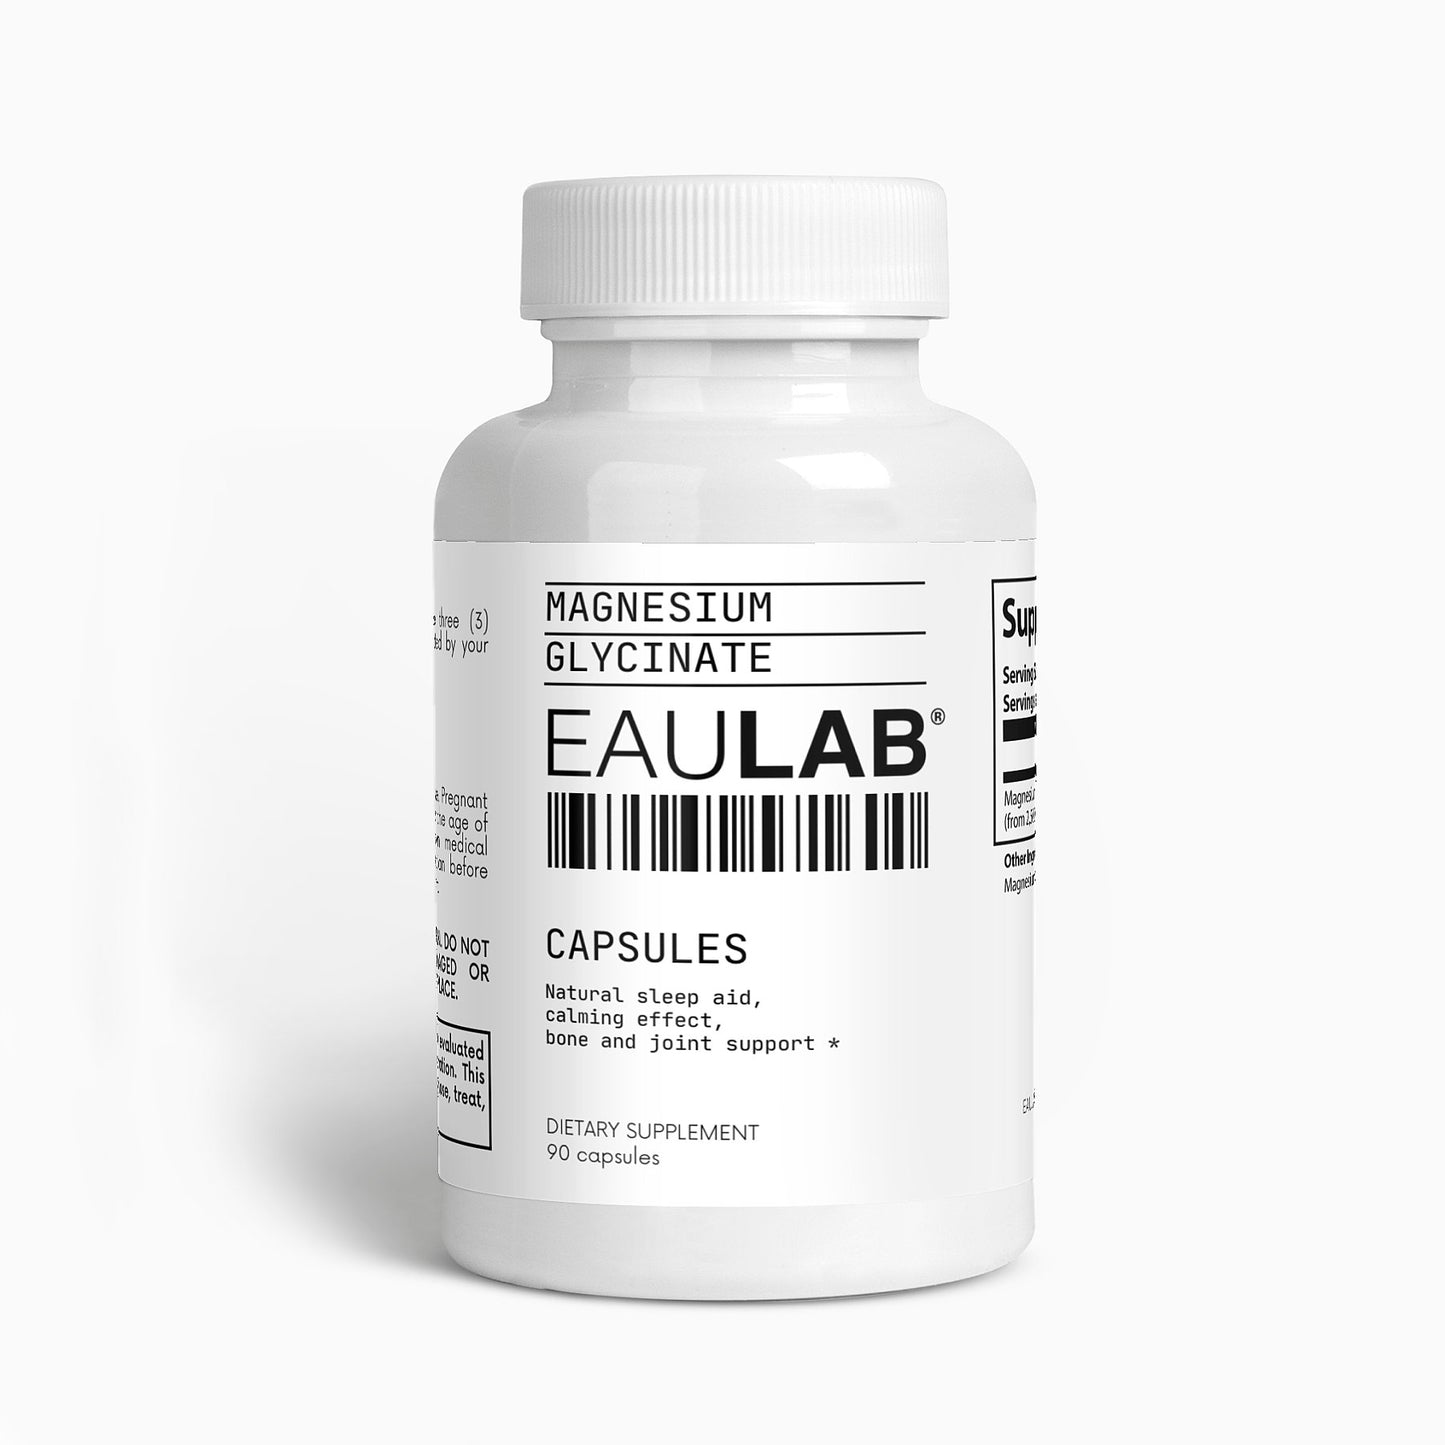 EAULAB® Magnesium Glycinate